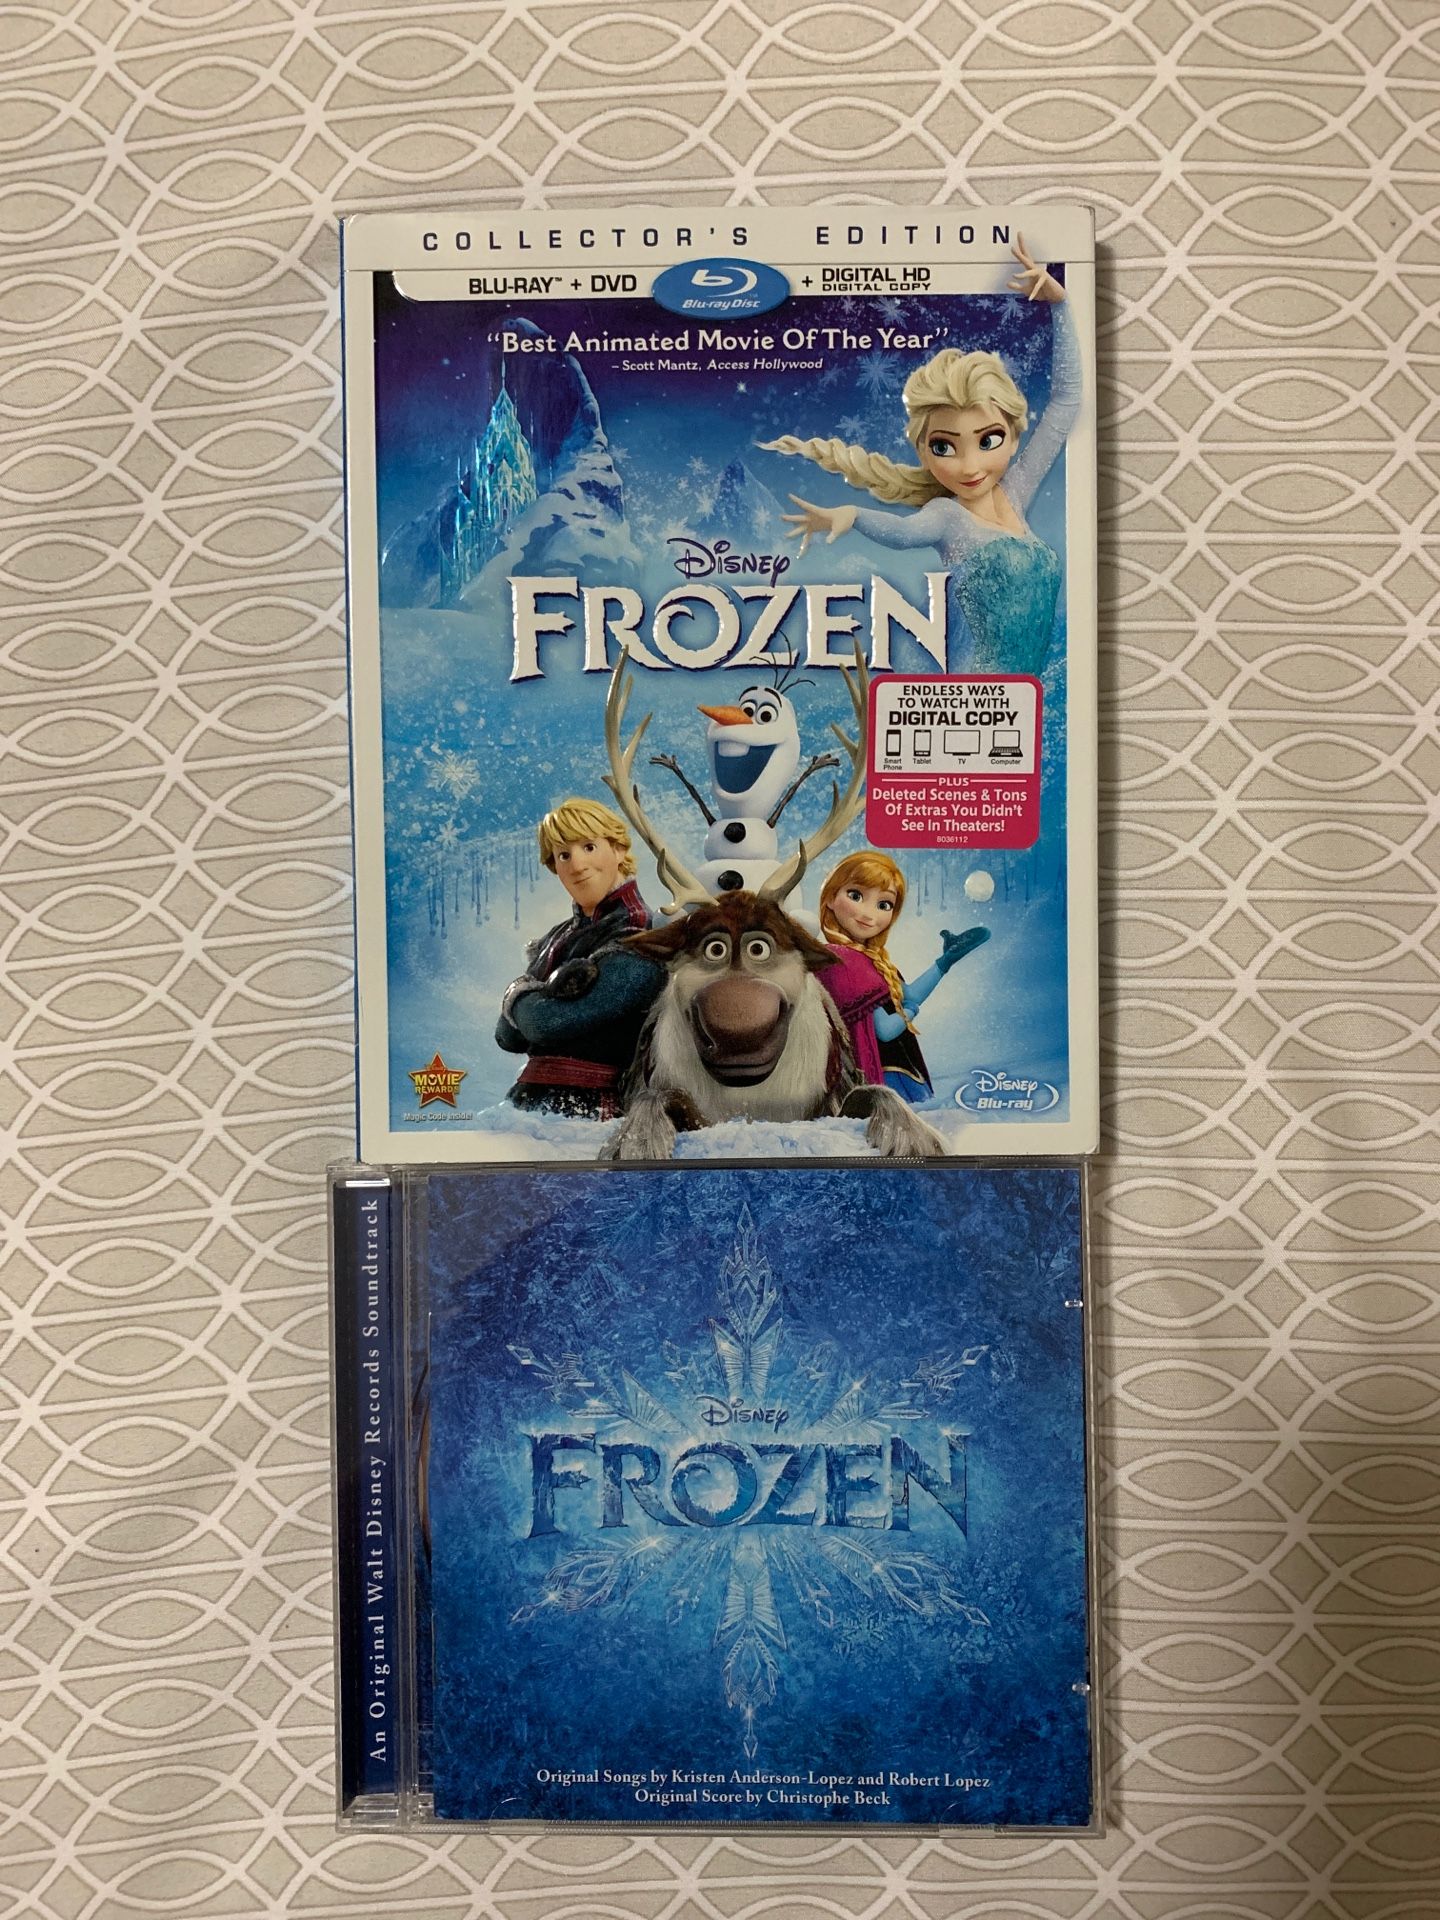 Disney Frozen - Collector’s Edition (Blu-Ray + DVD + Digita HD Digital Copy) + Frozen Soundtrack